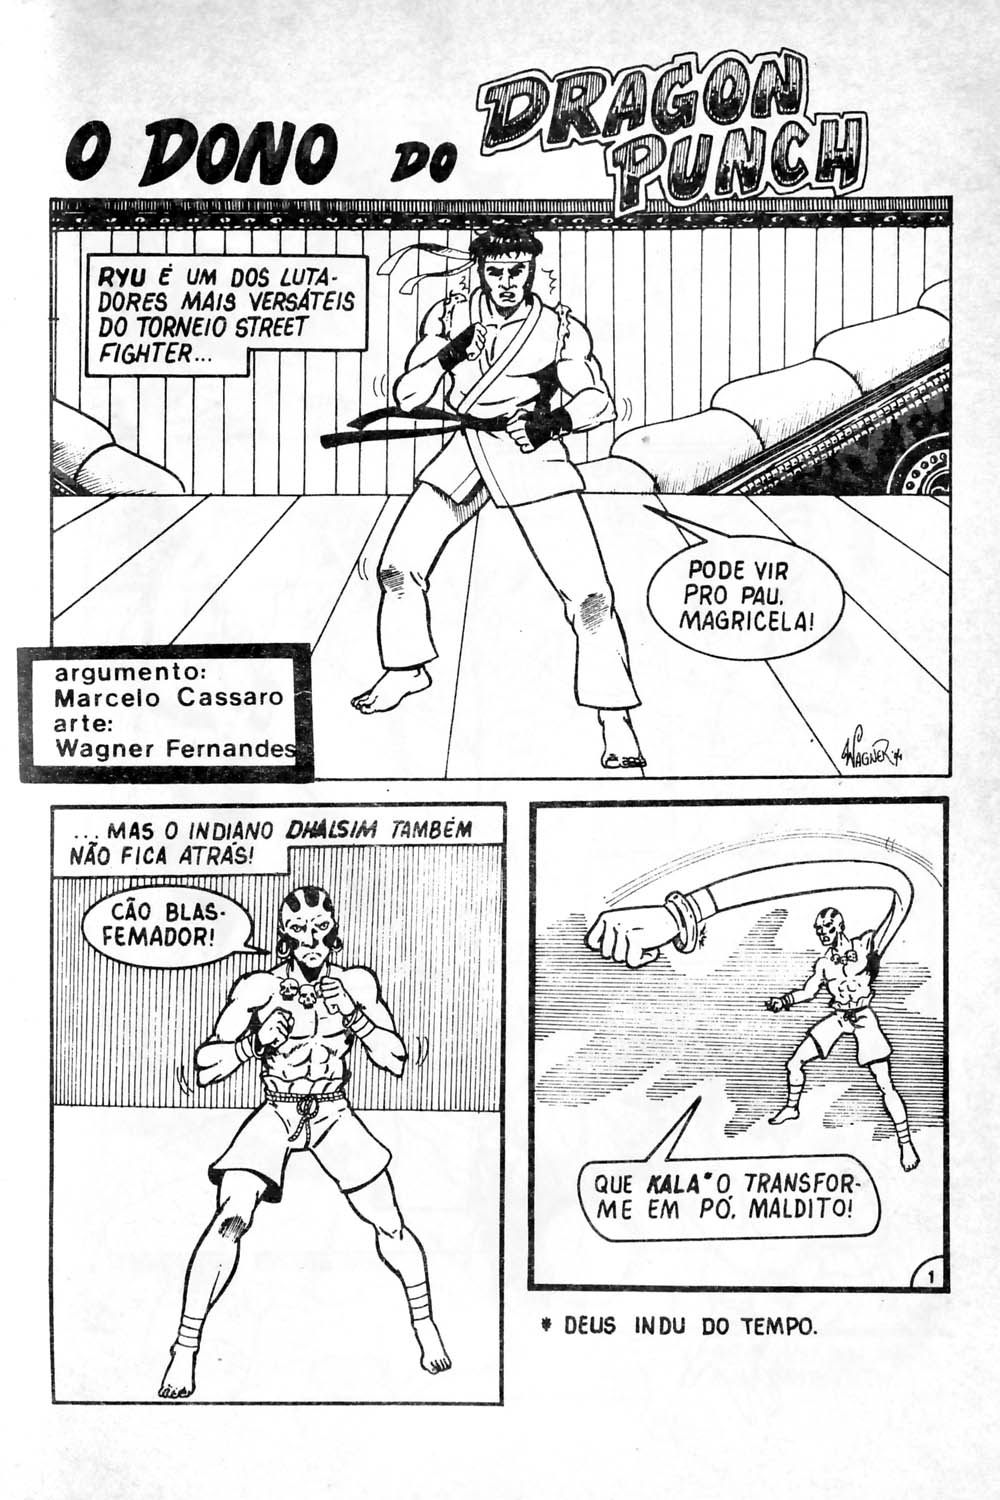 Street fighter comics ( portuguese ) 24